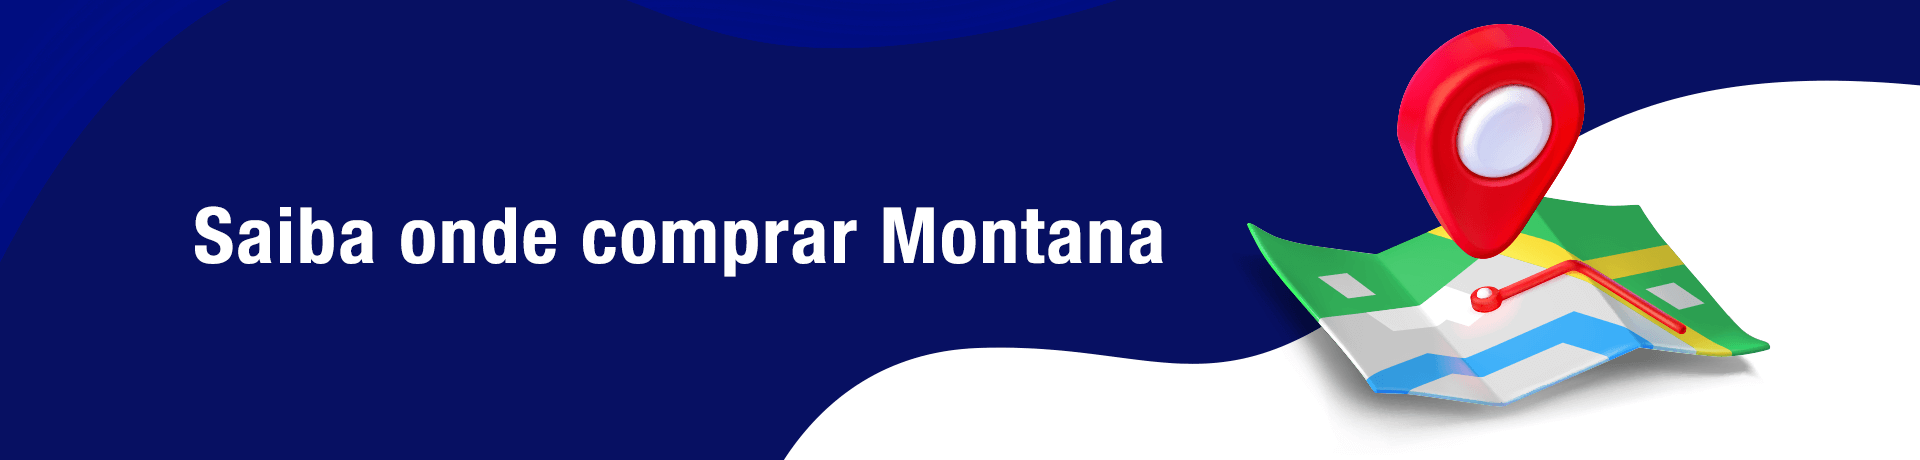 Saiba onde comprar Montana